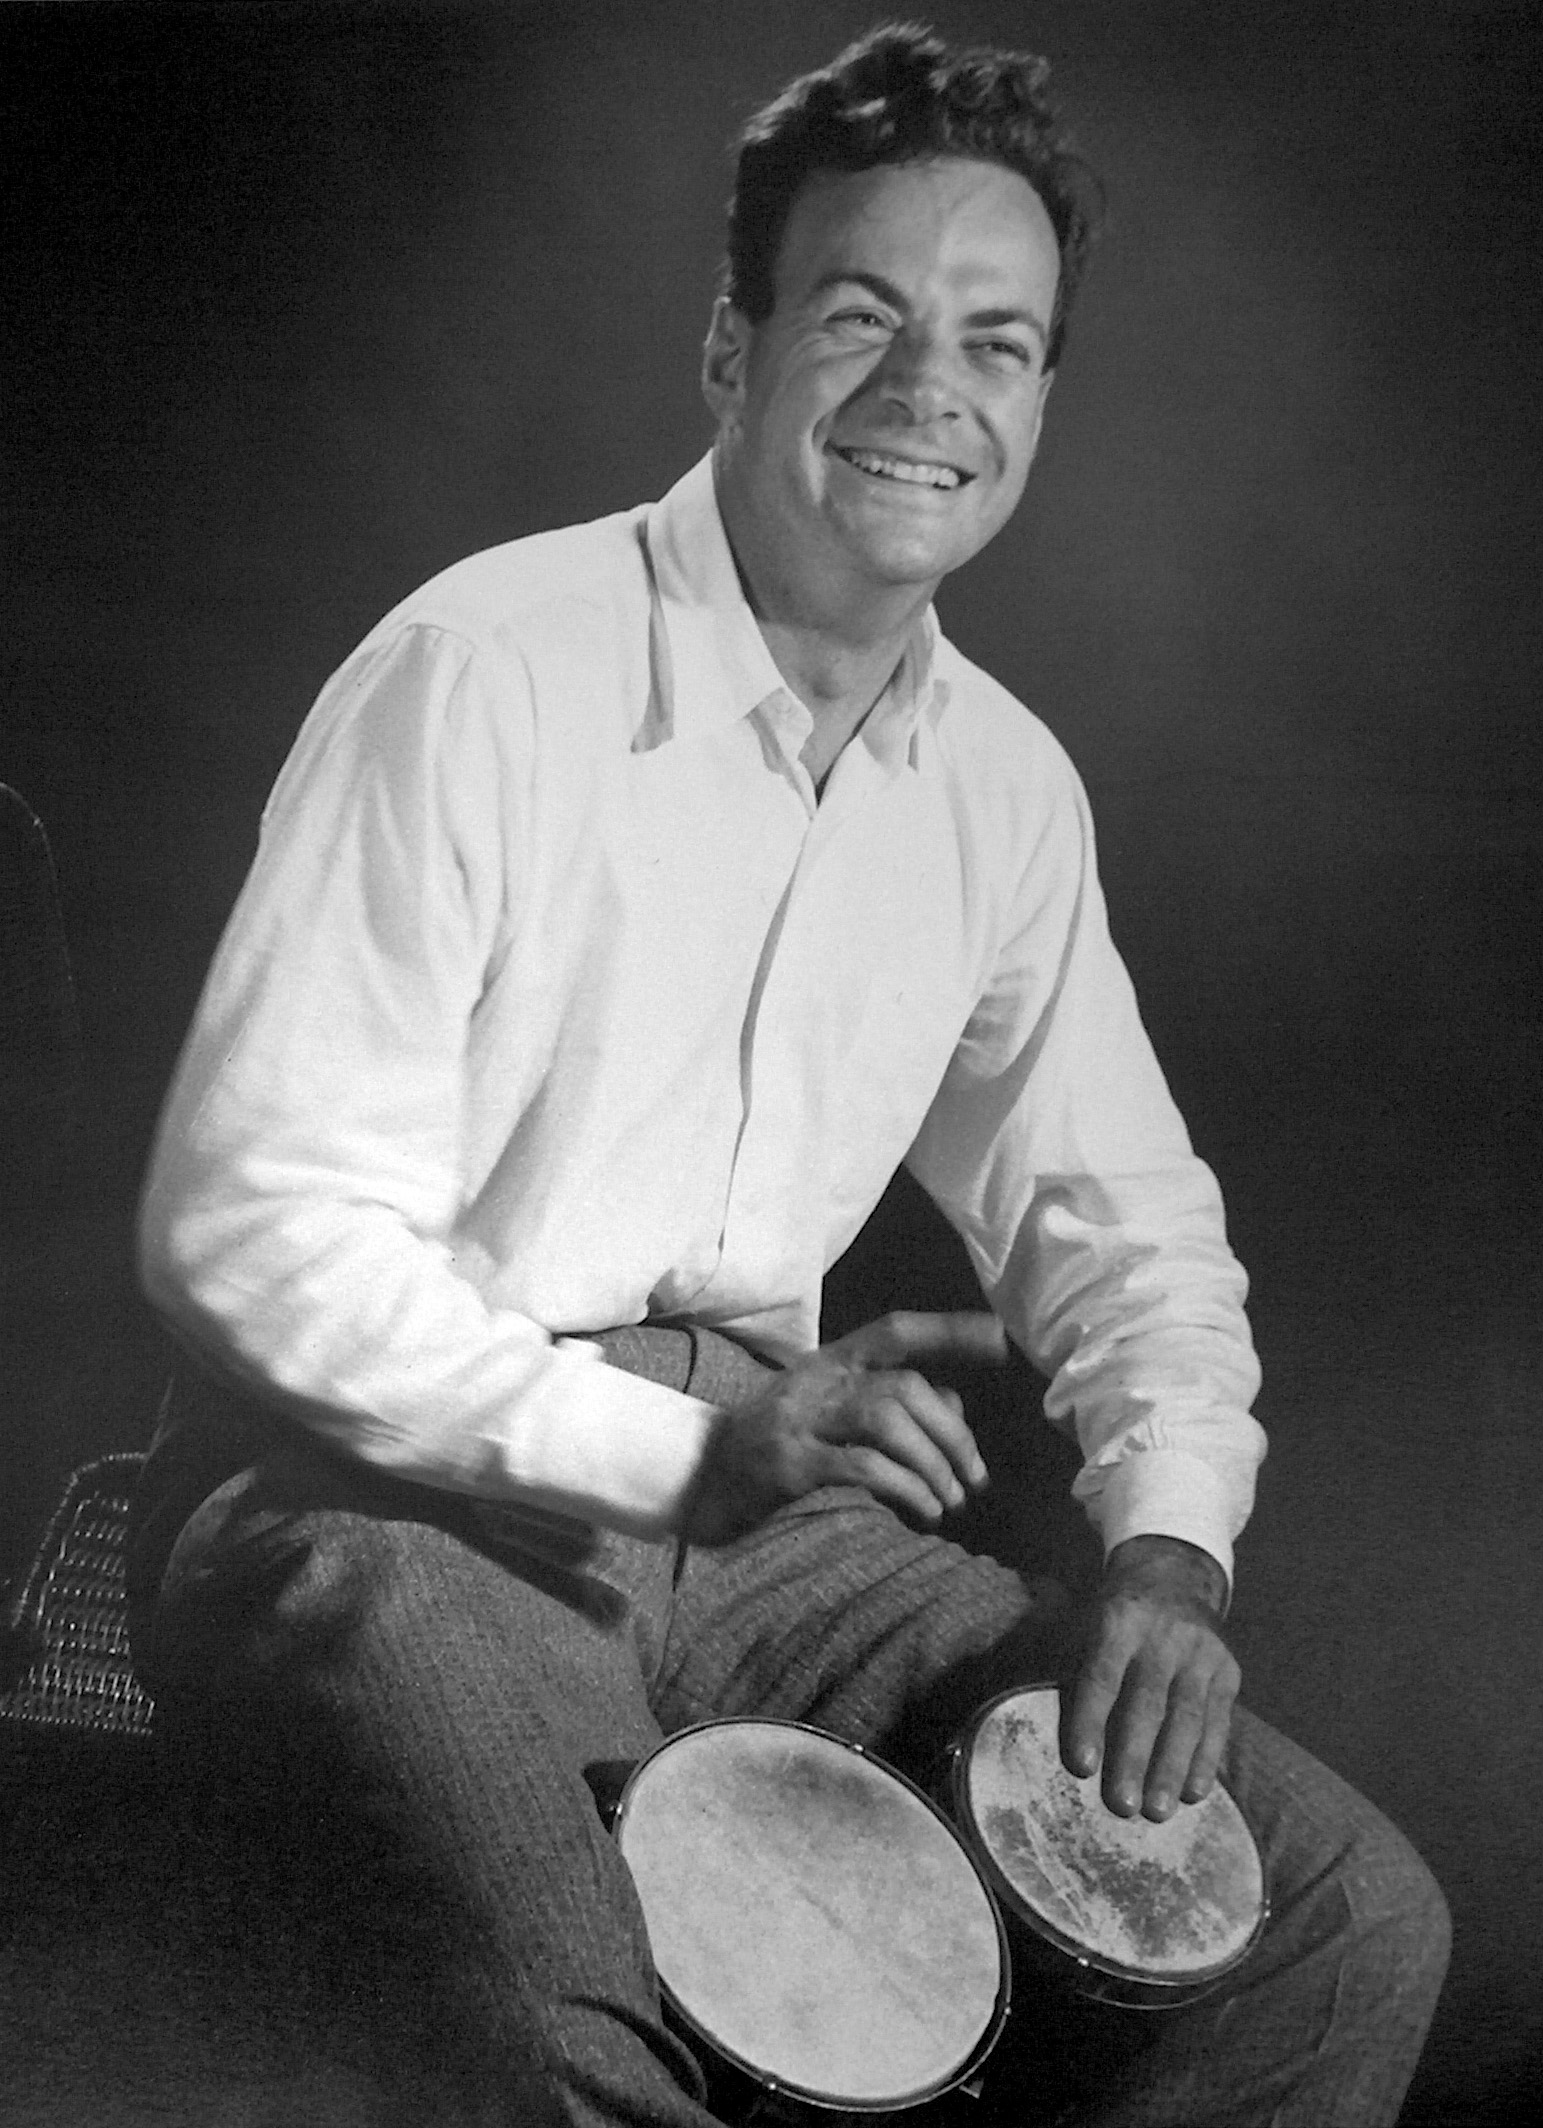 Richard Feynman on the bongo drums